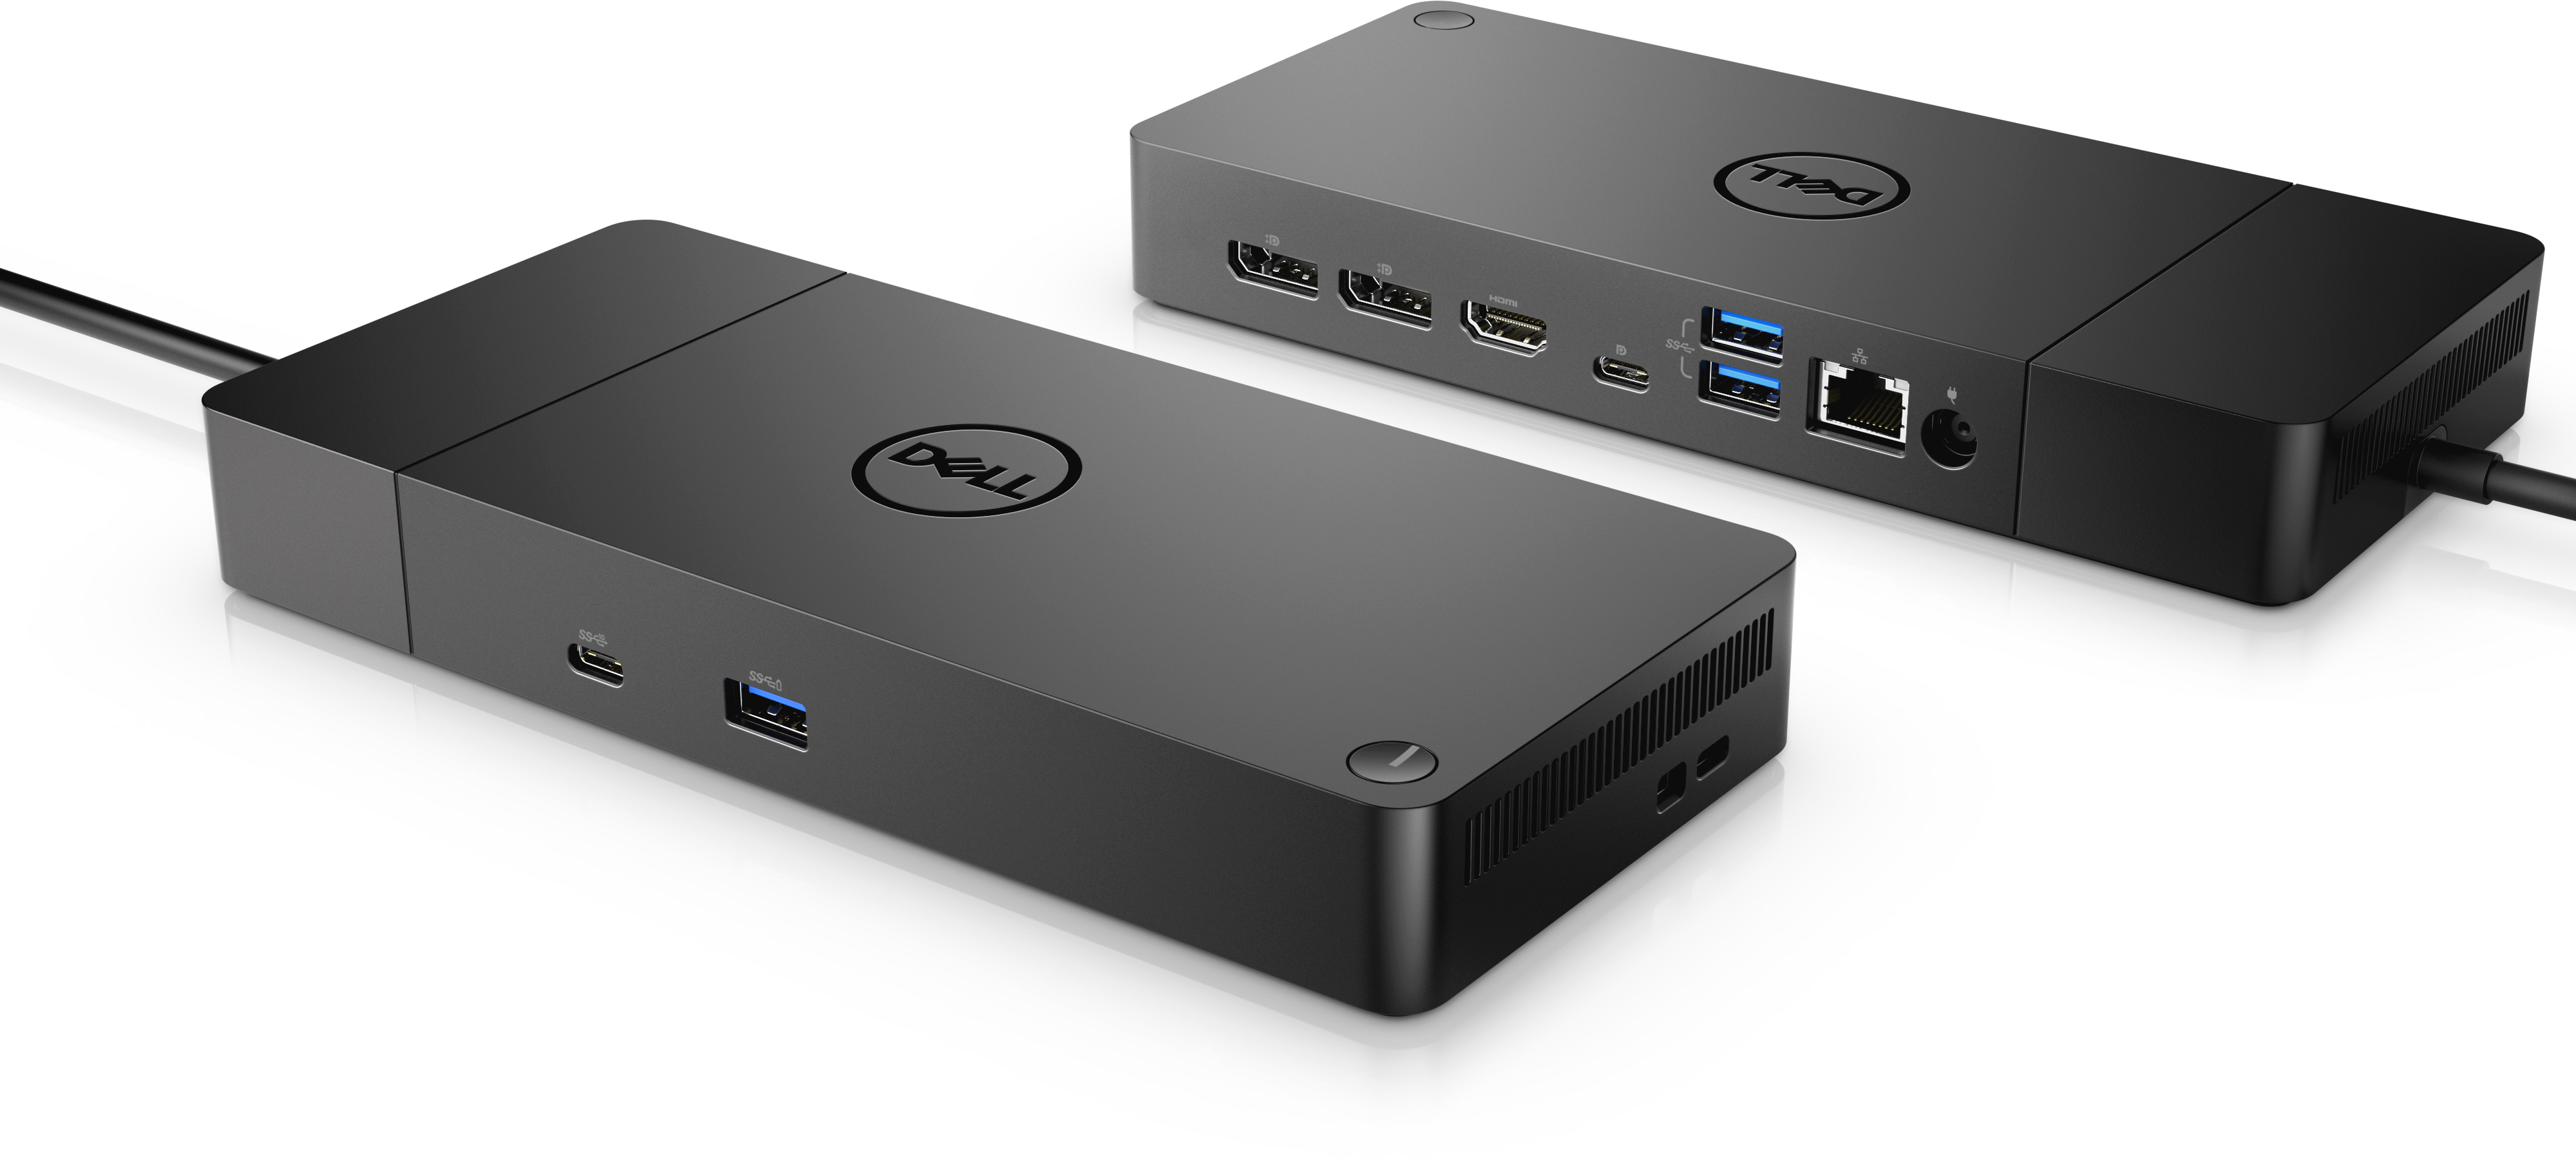 USB-C Dock - Dual Monitor HDMI - 65W PD - USB-C Docking Stations, Universal Laptop Docking Stations